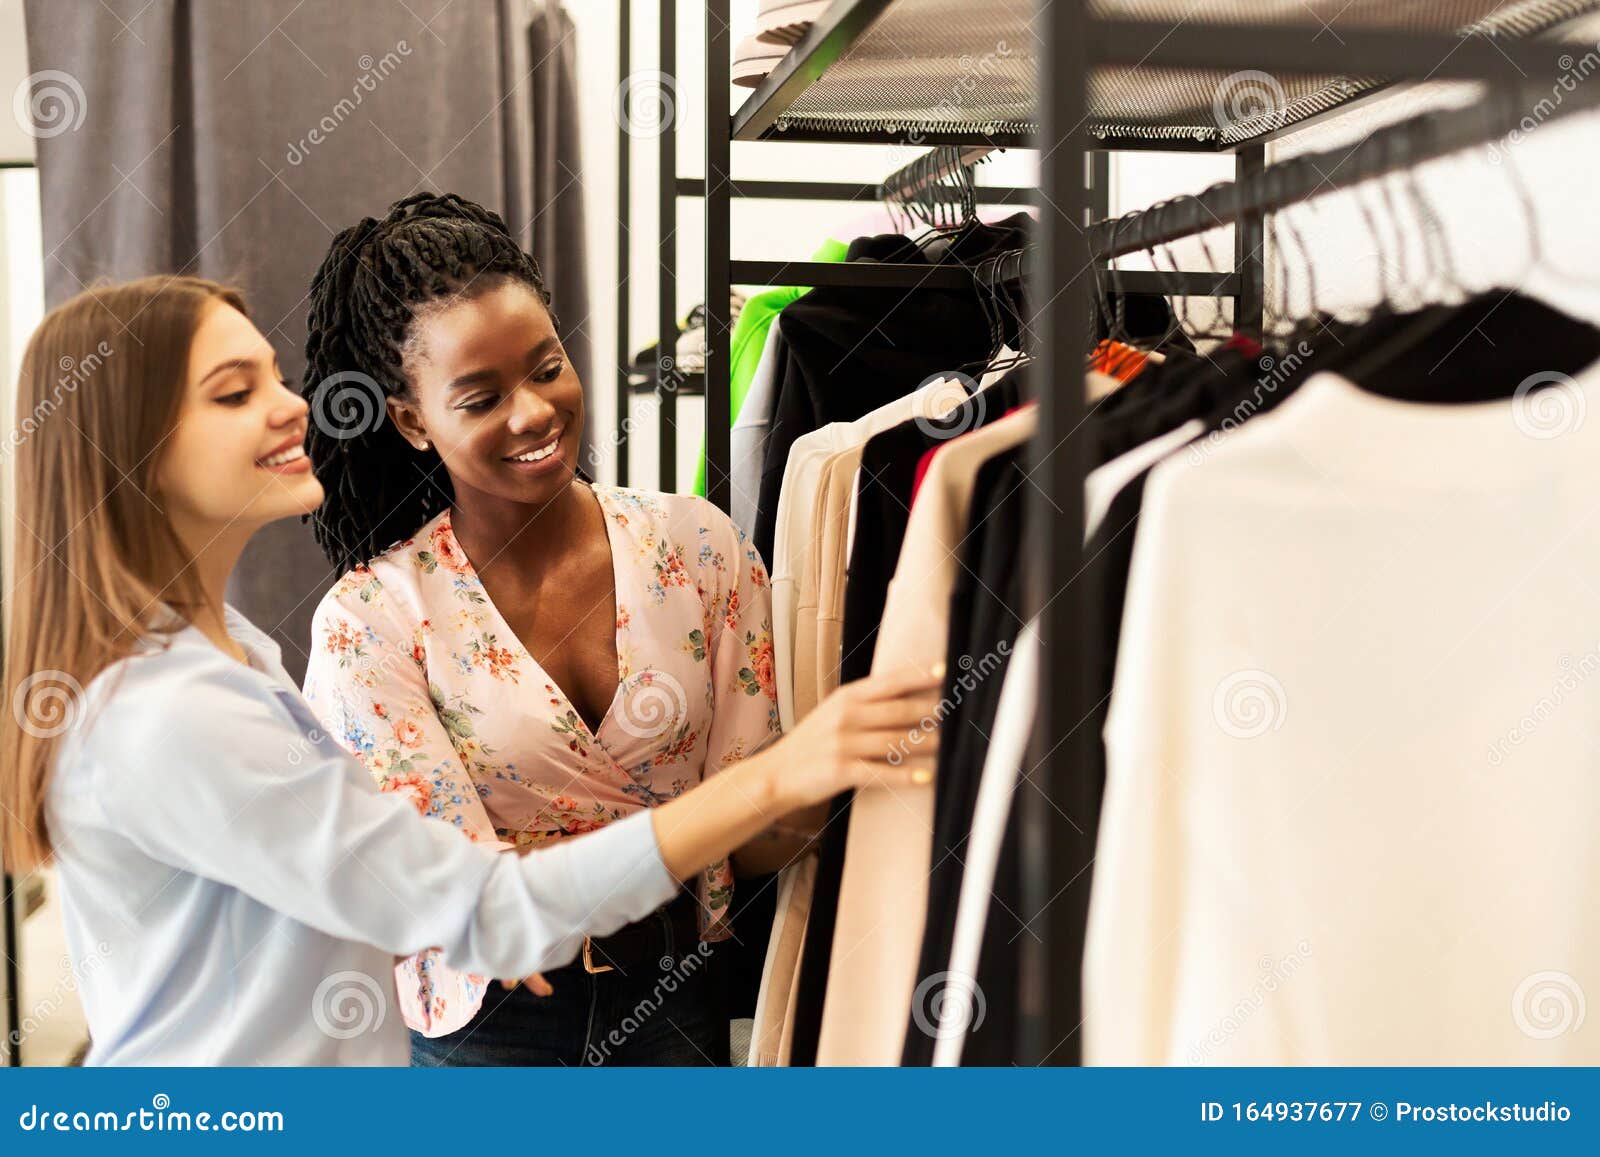 Personal Shopping, Personal Shopper, Wardrobe Stylist